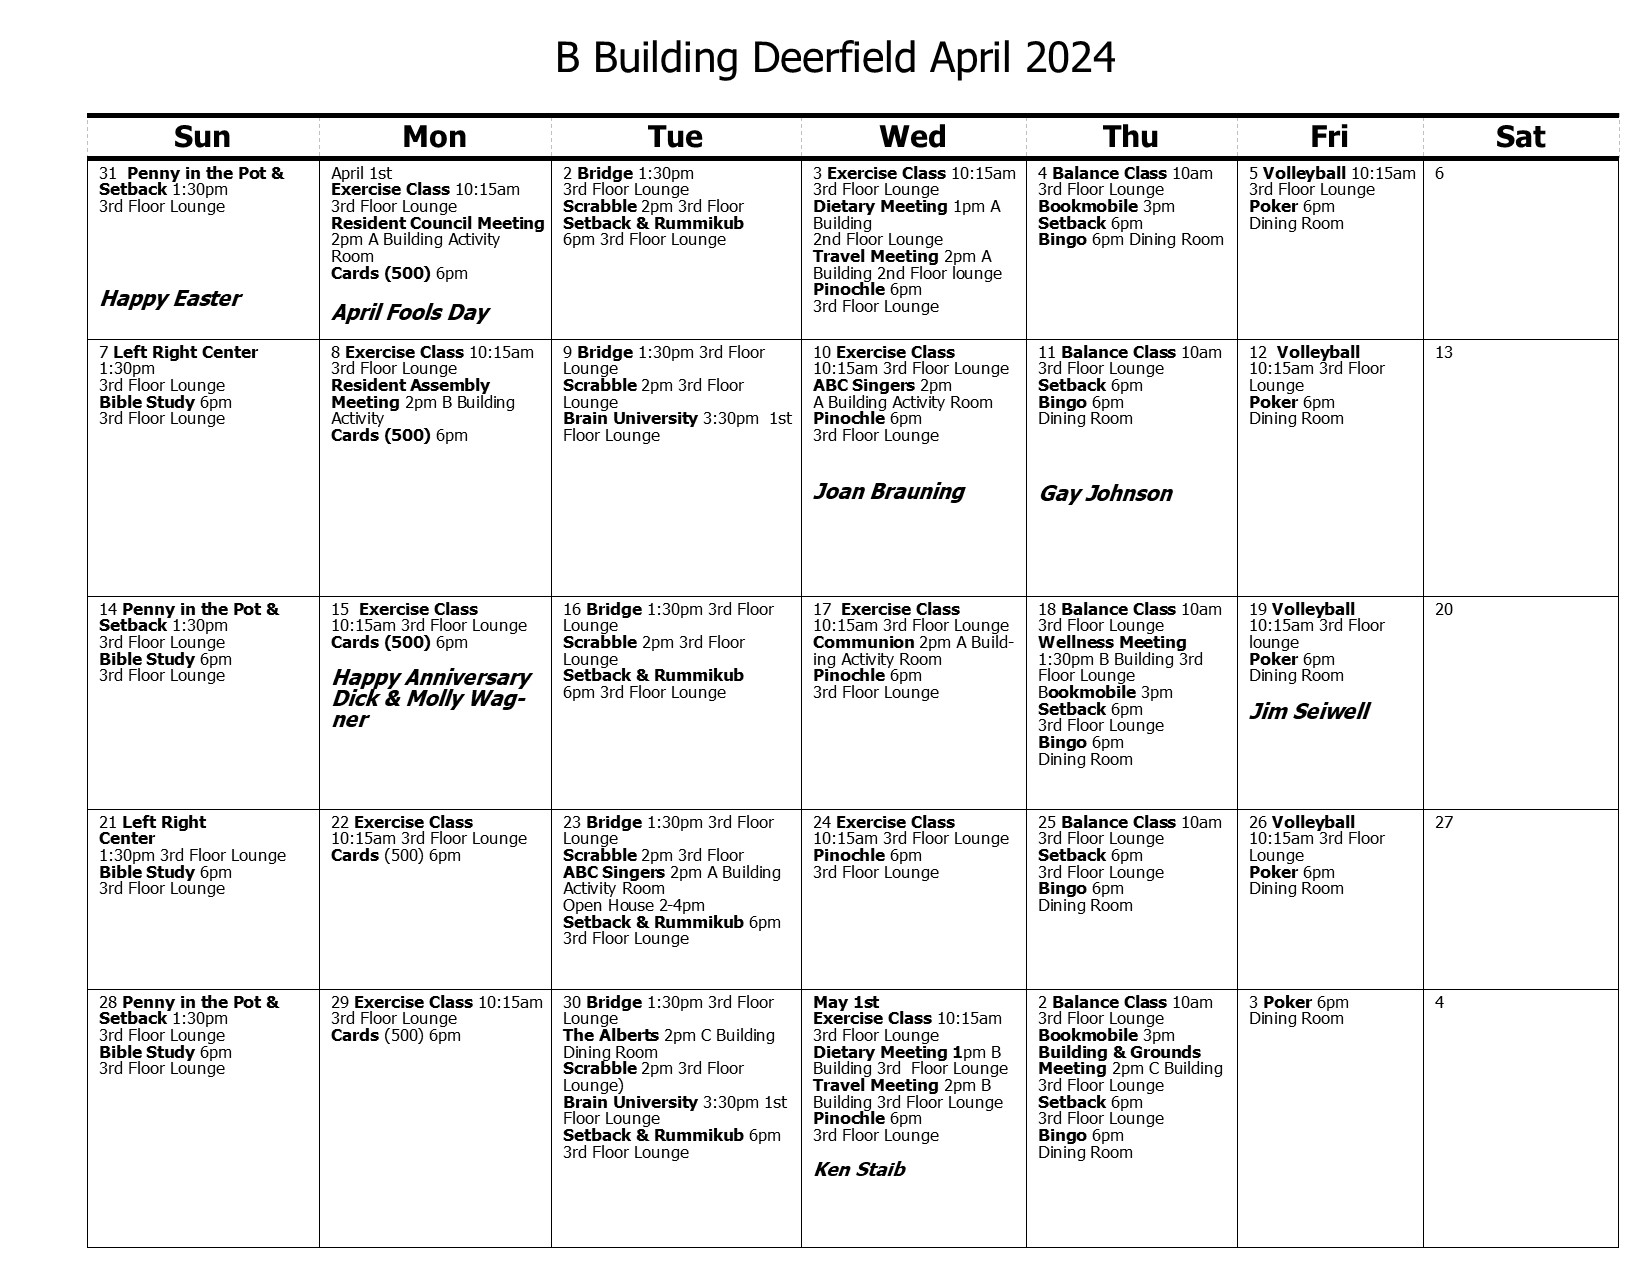 B Building Calendar April 2024